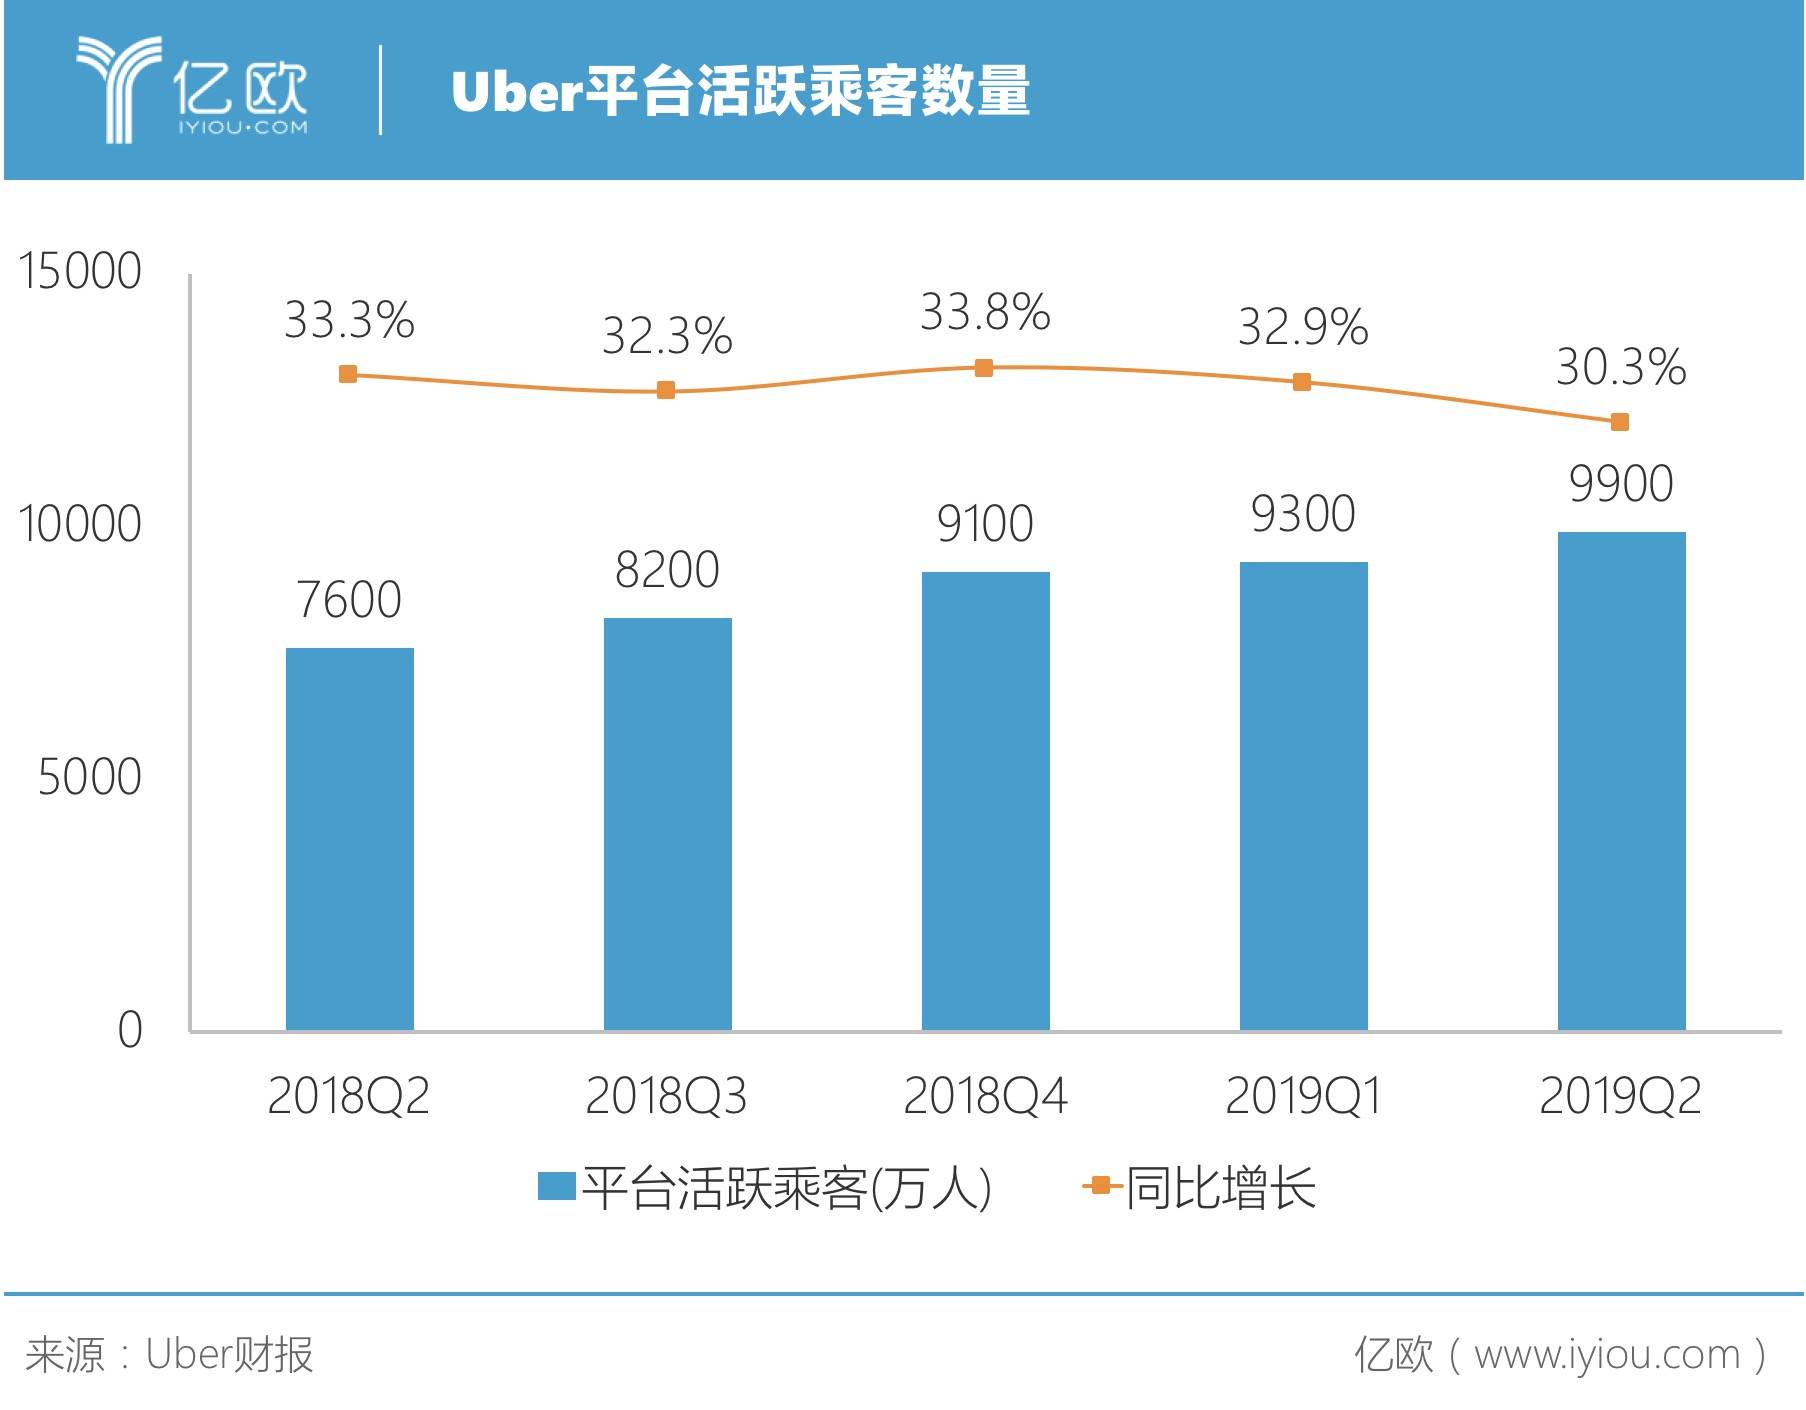 Uber平台活跃乘客数量